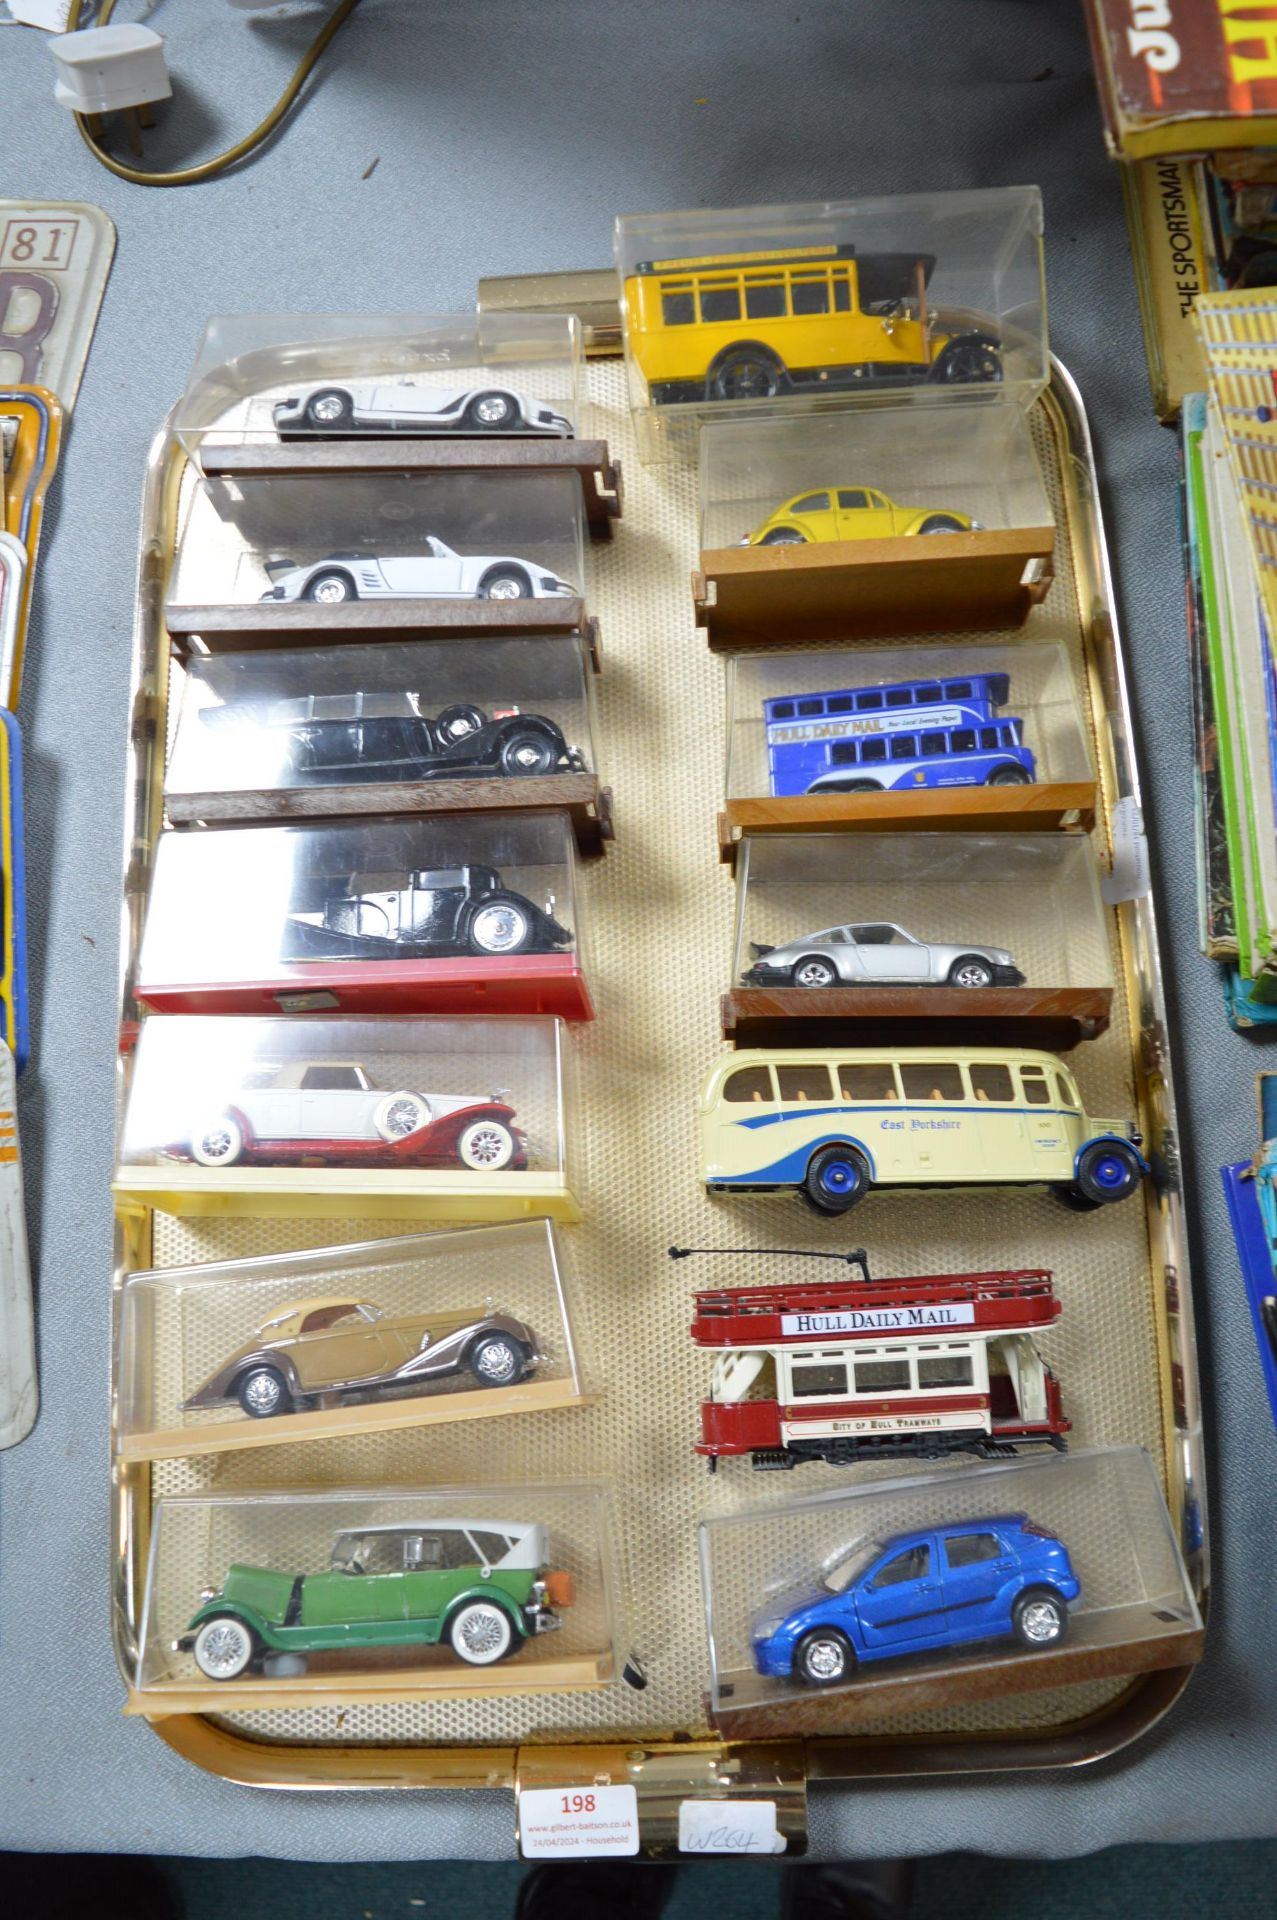 Diecast Toy Cars, Busses, etc.